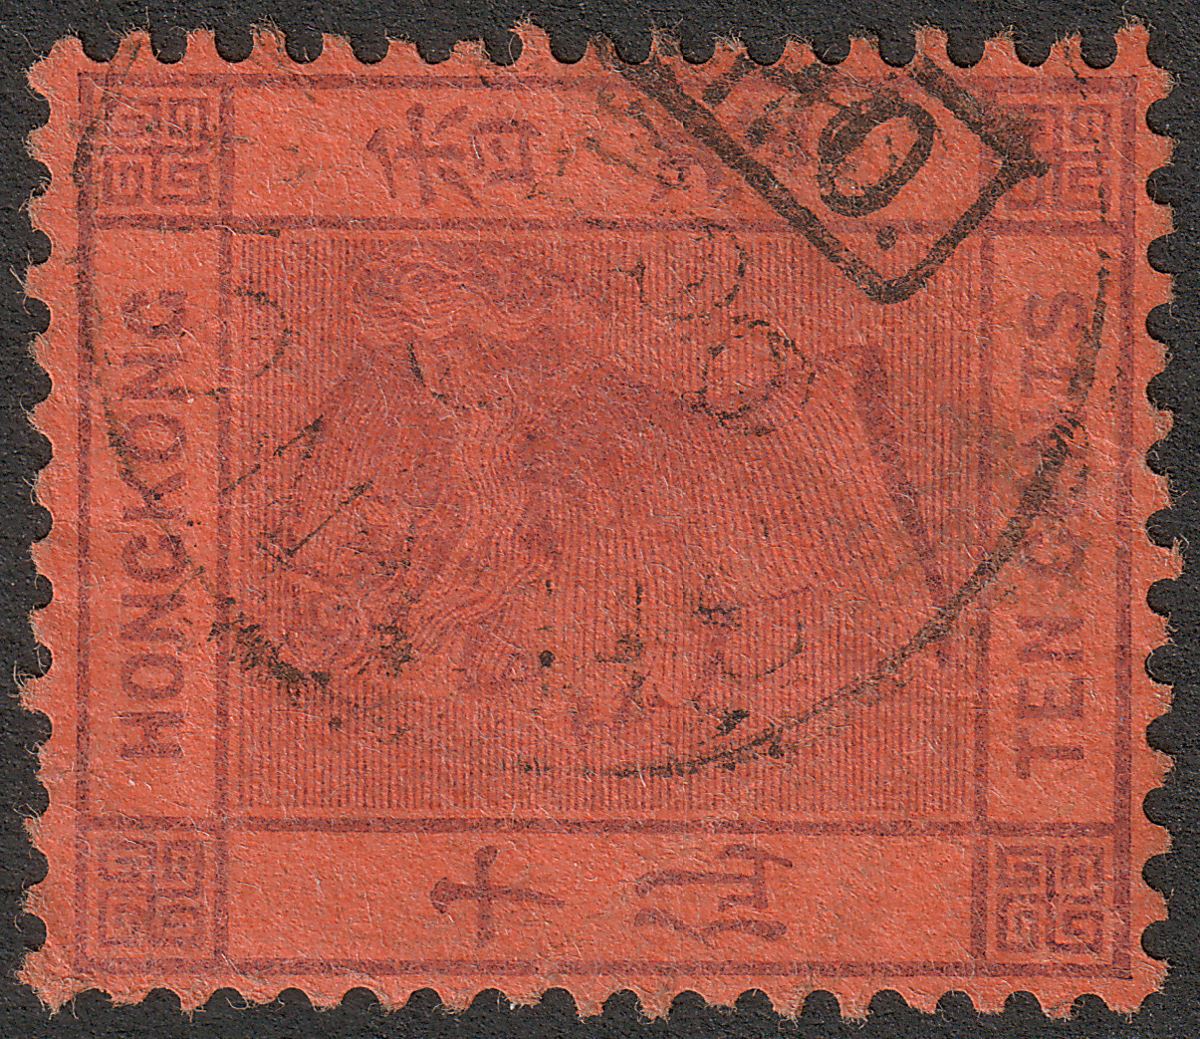 Hong Kong 1899 QV 10c Used with Newchwang IPO Mark and Shanghai Postmark